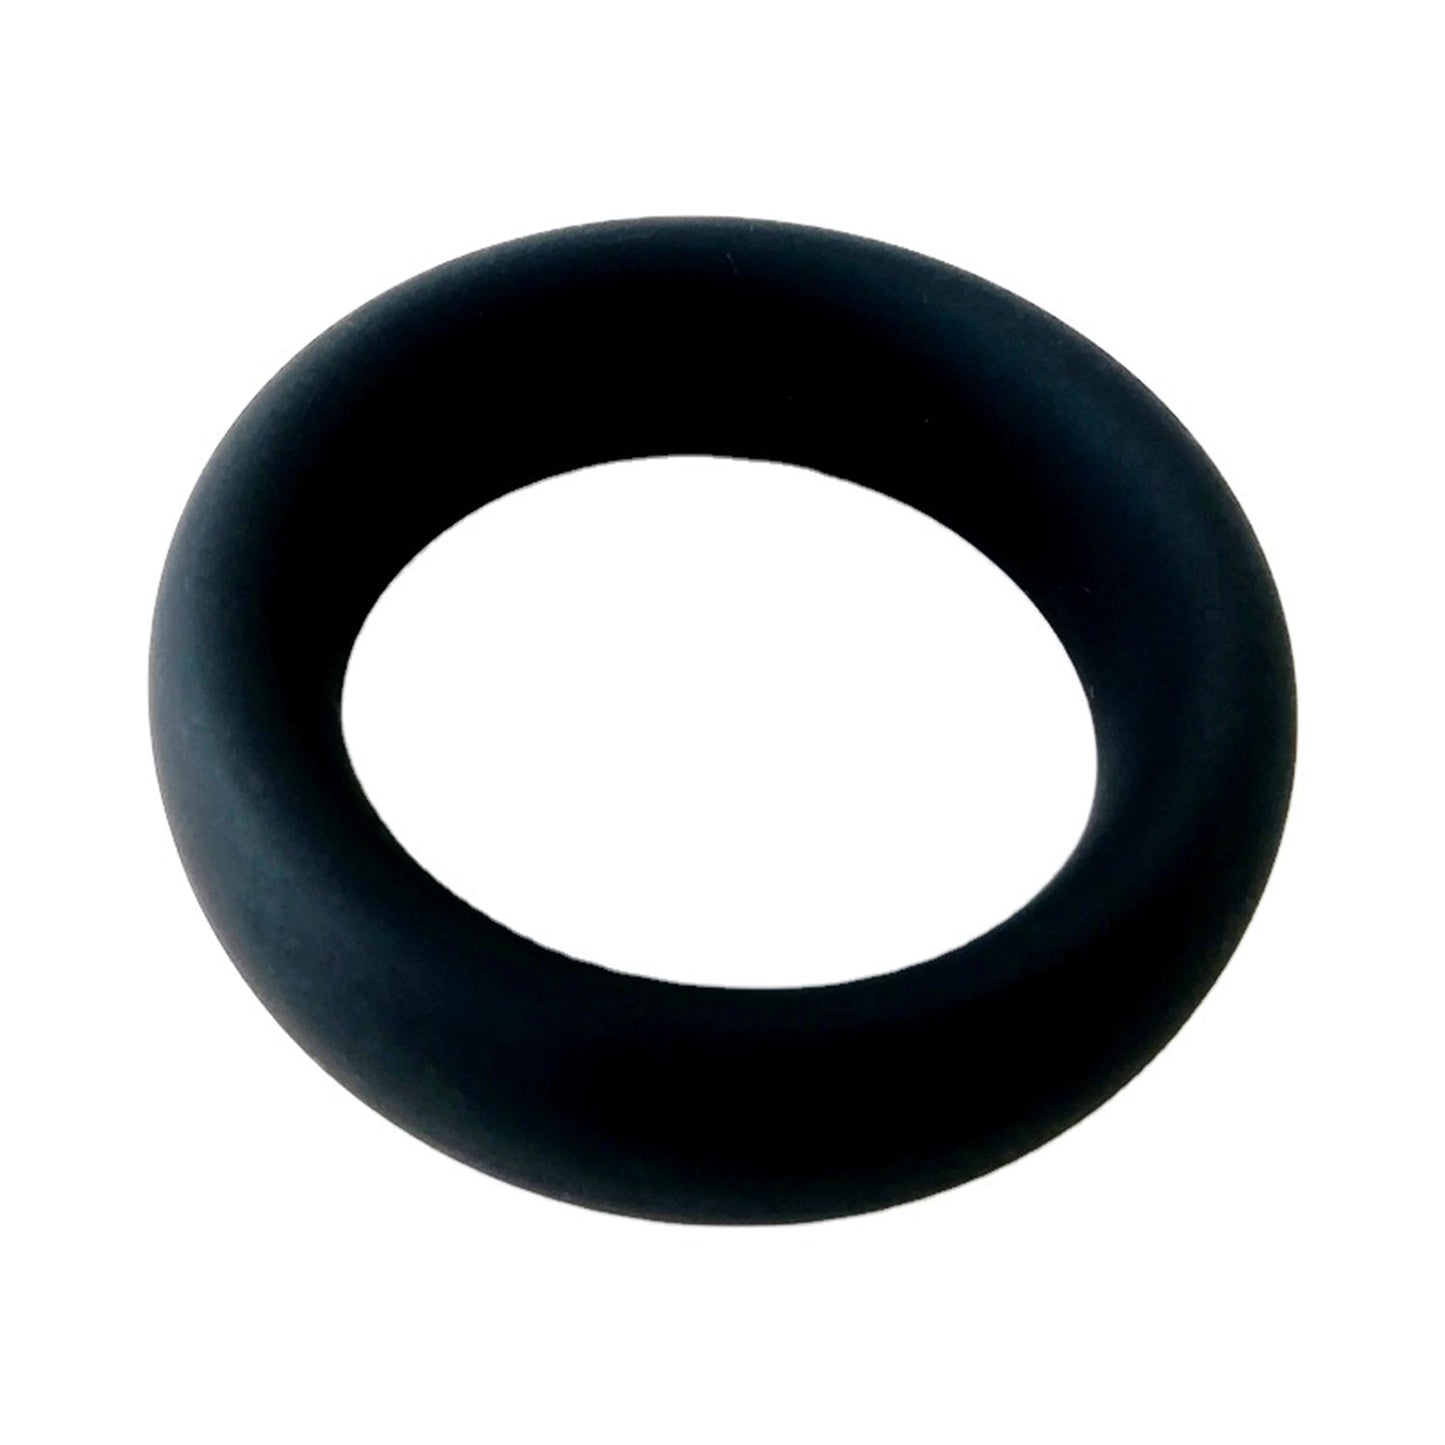 The Horny Company - John O 45 mm Silicone Cock Ring Black